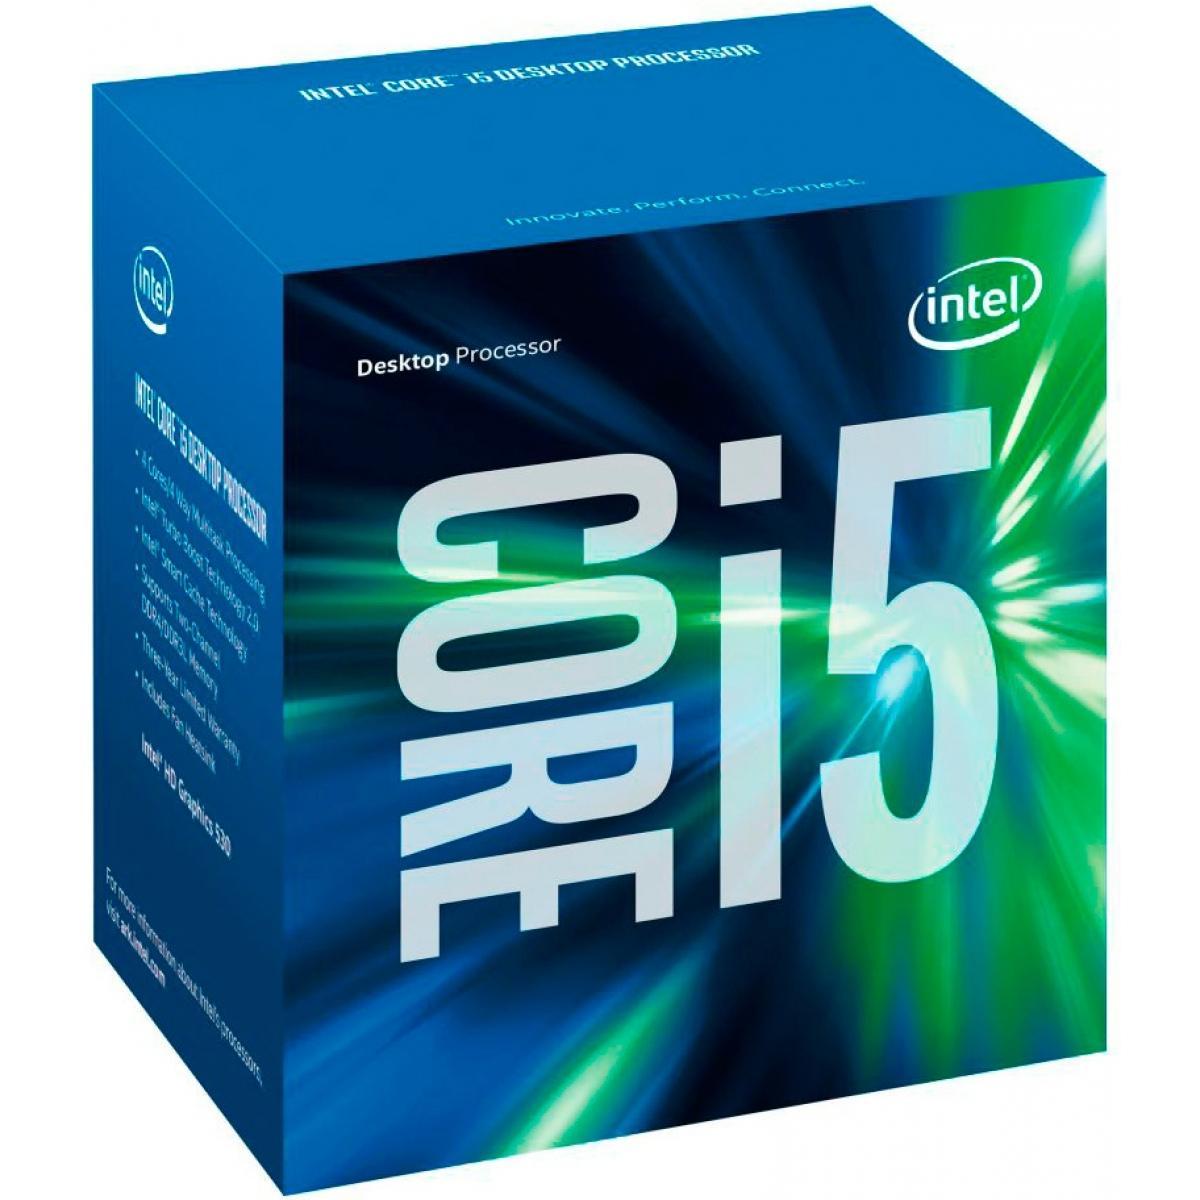 Pc Gamer Barato Completo Intel I5 8gb Hd 1tb Geforce 2gb